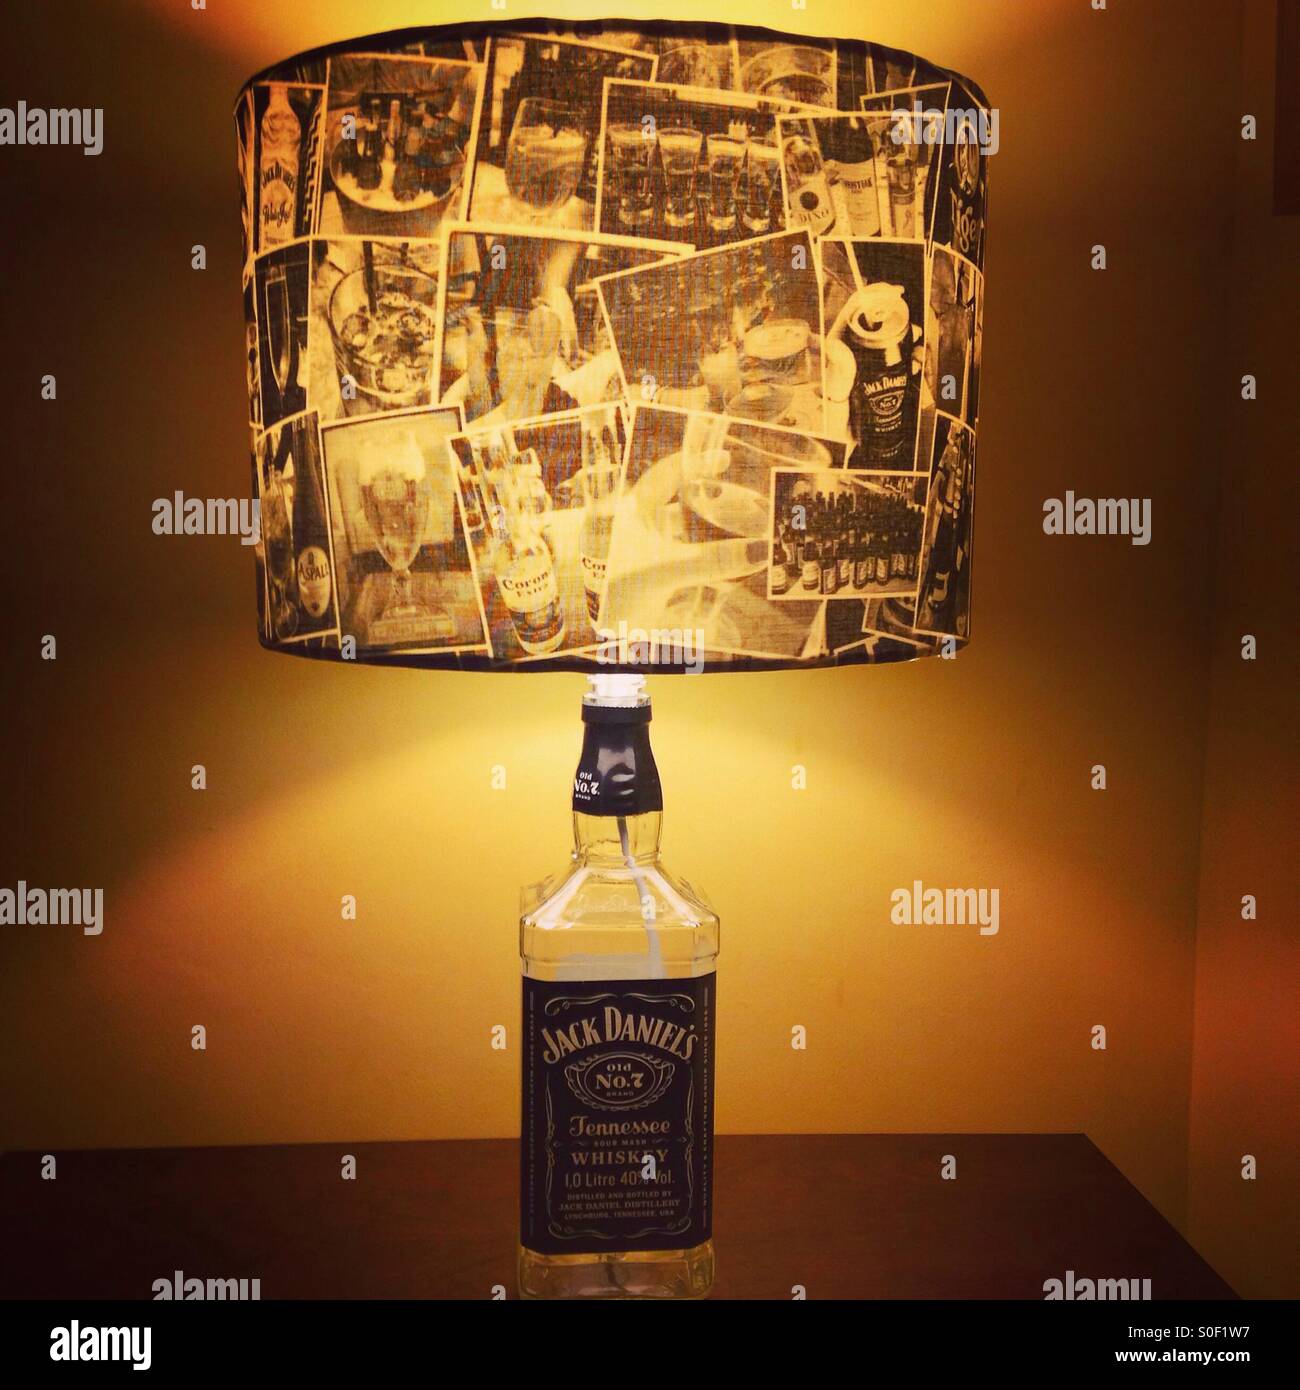 Jack Daniels Flasche Lampe Stockfotografie - Alamy